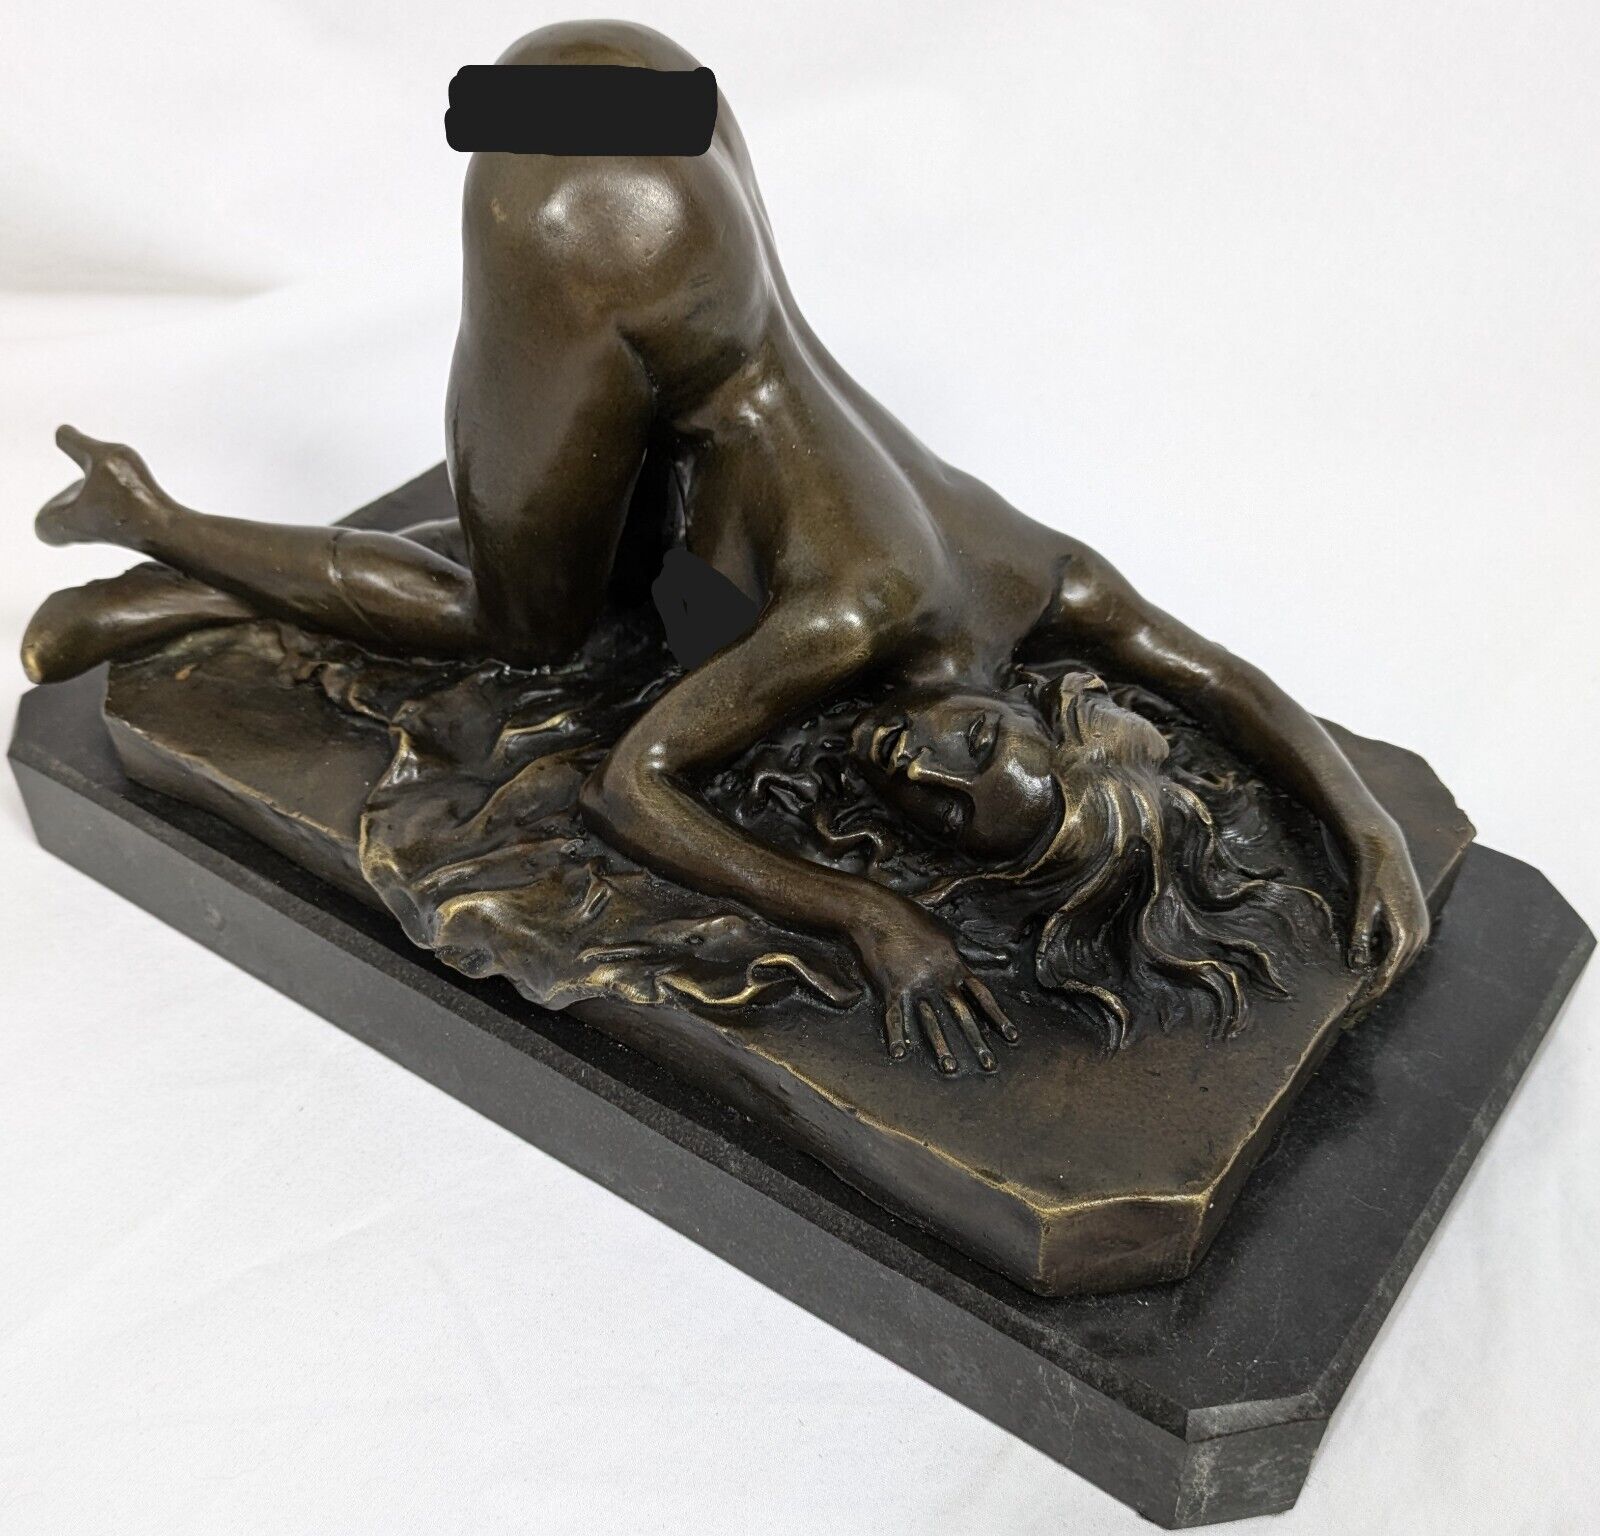 PREISS Bronze Nude Woman in Boots Sculpture European Finery Statue Art Fantasy